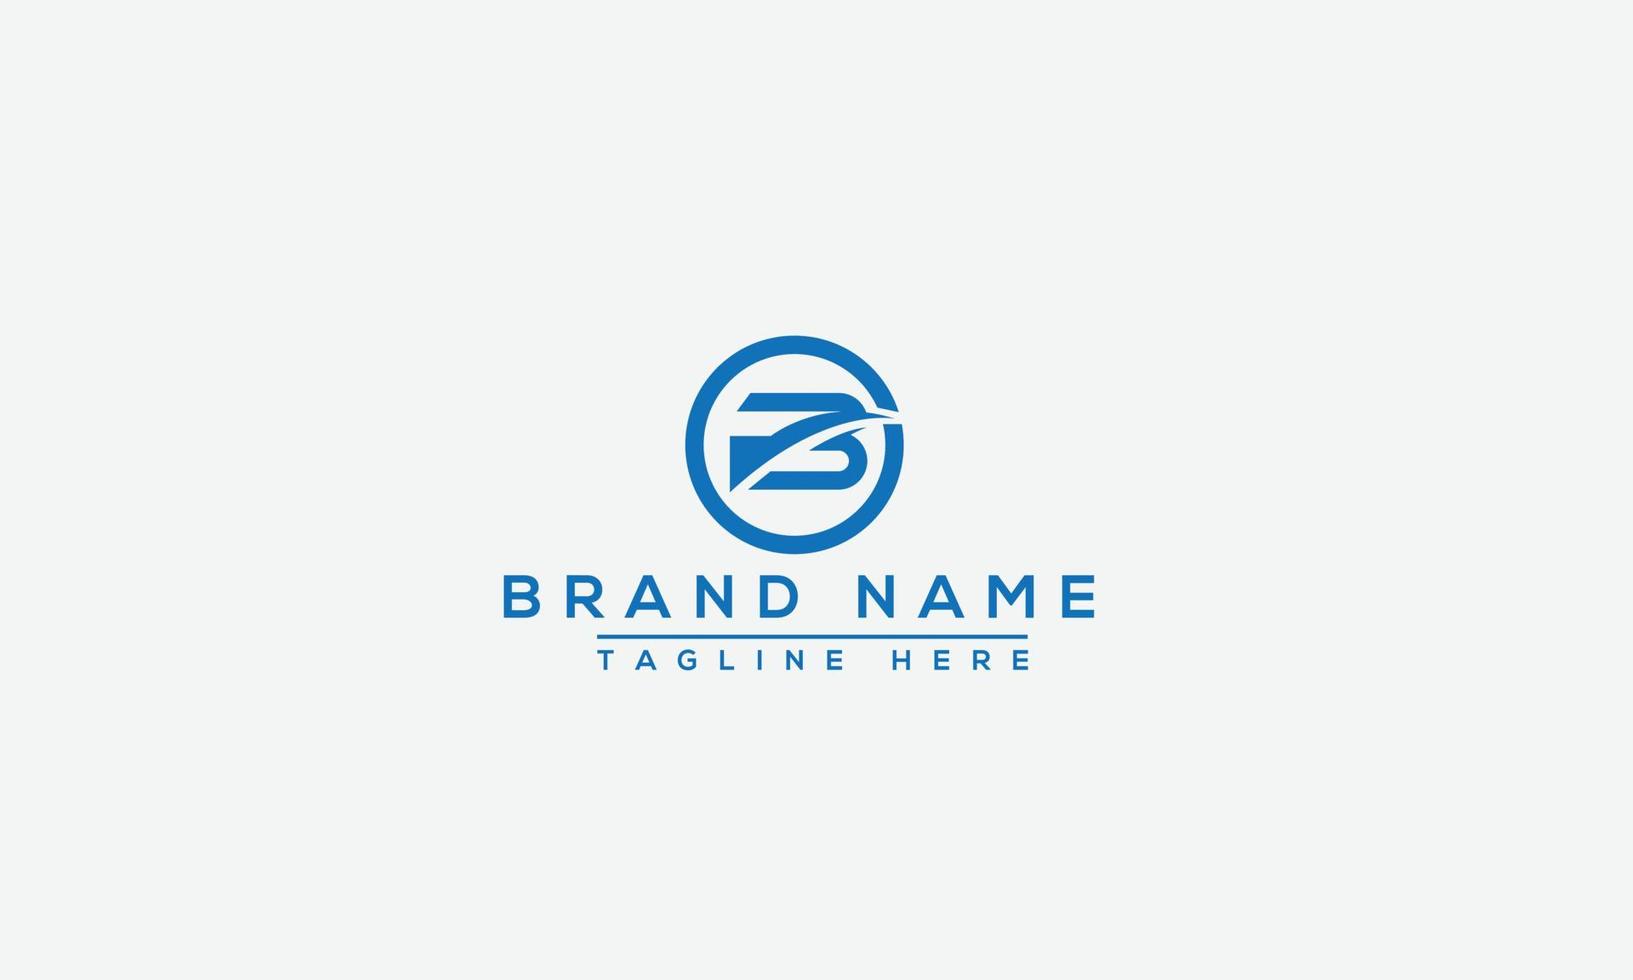 b elemento de branding gráfico de vetor de modelo de design de logotipo.